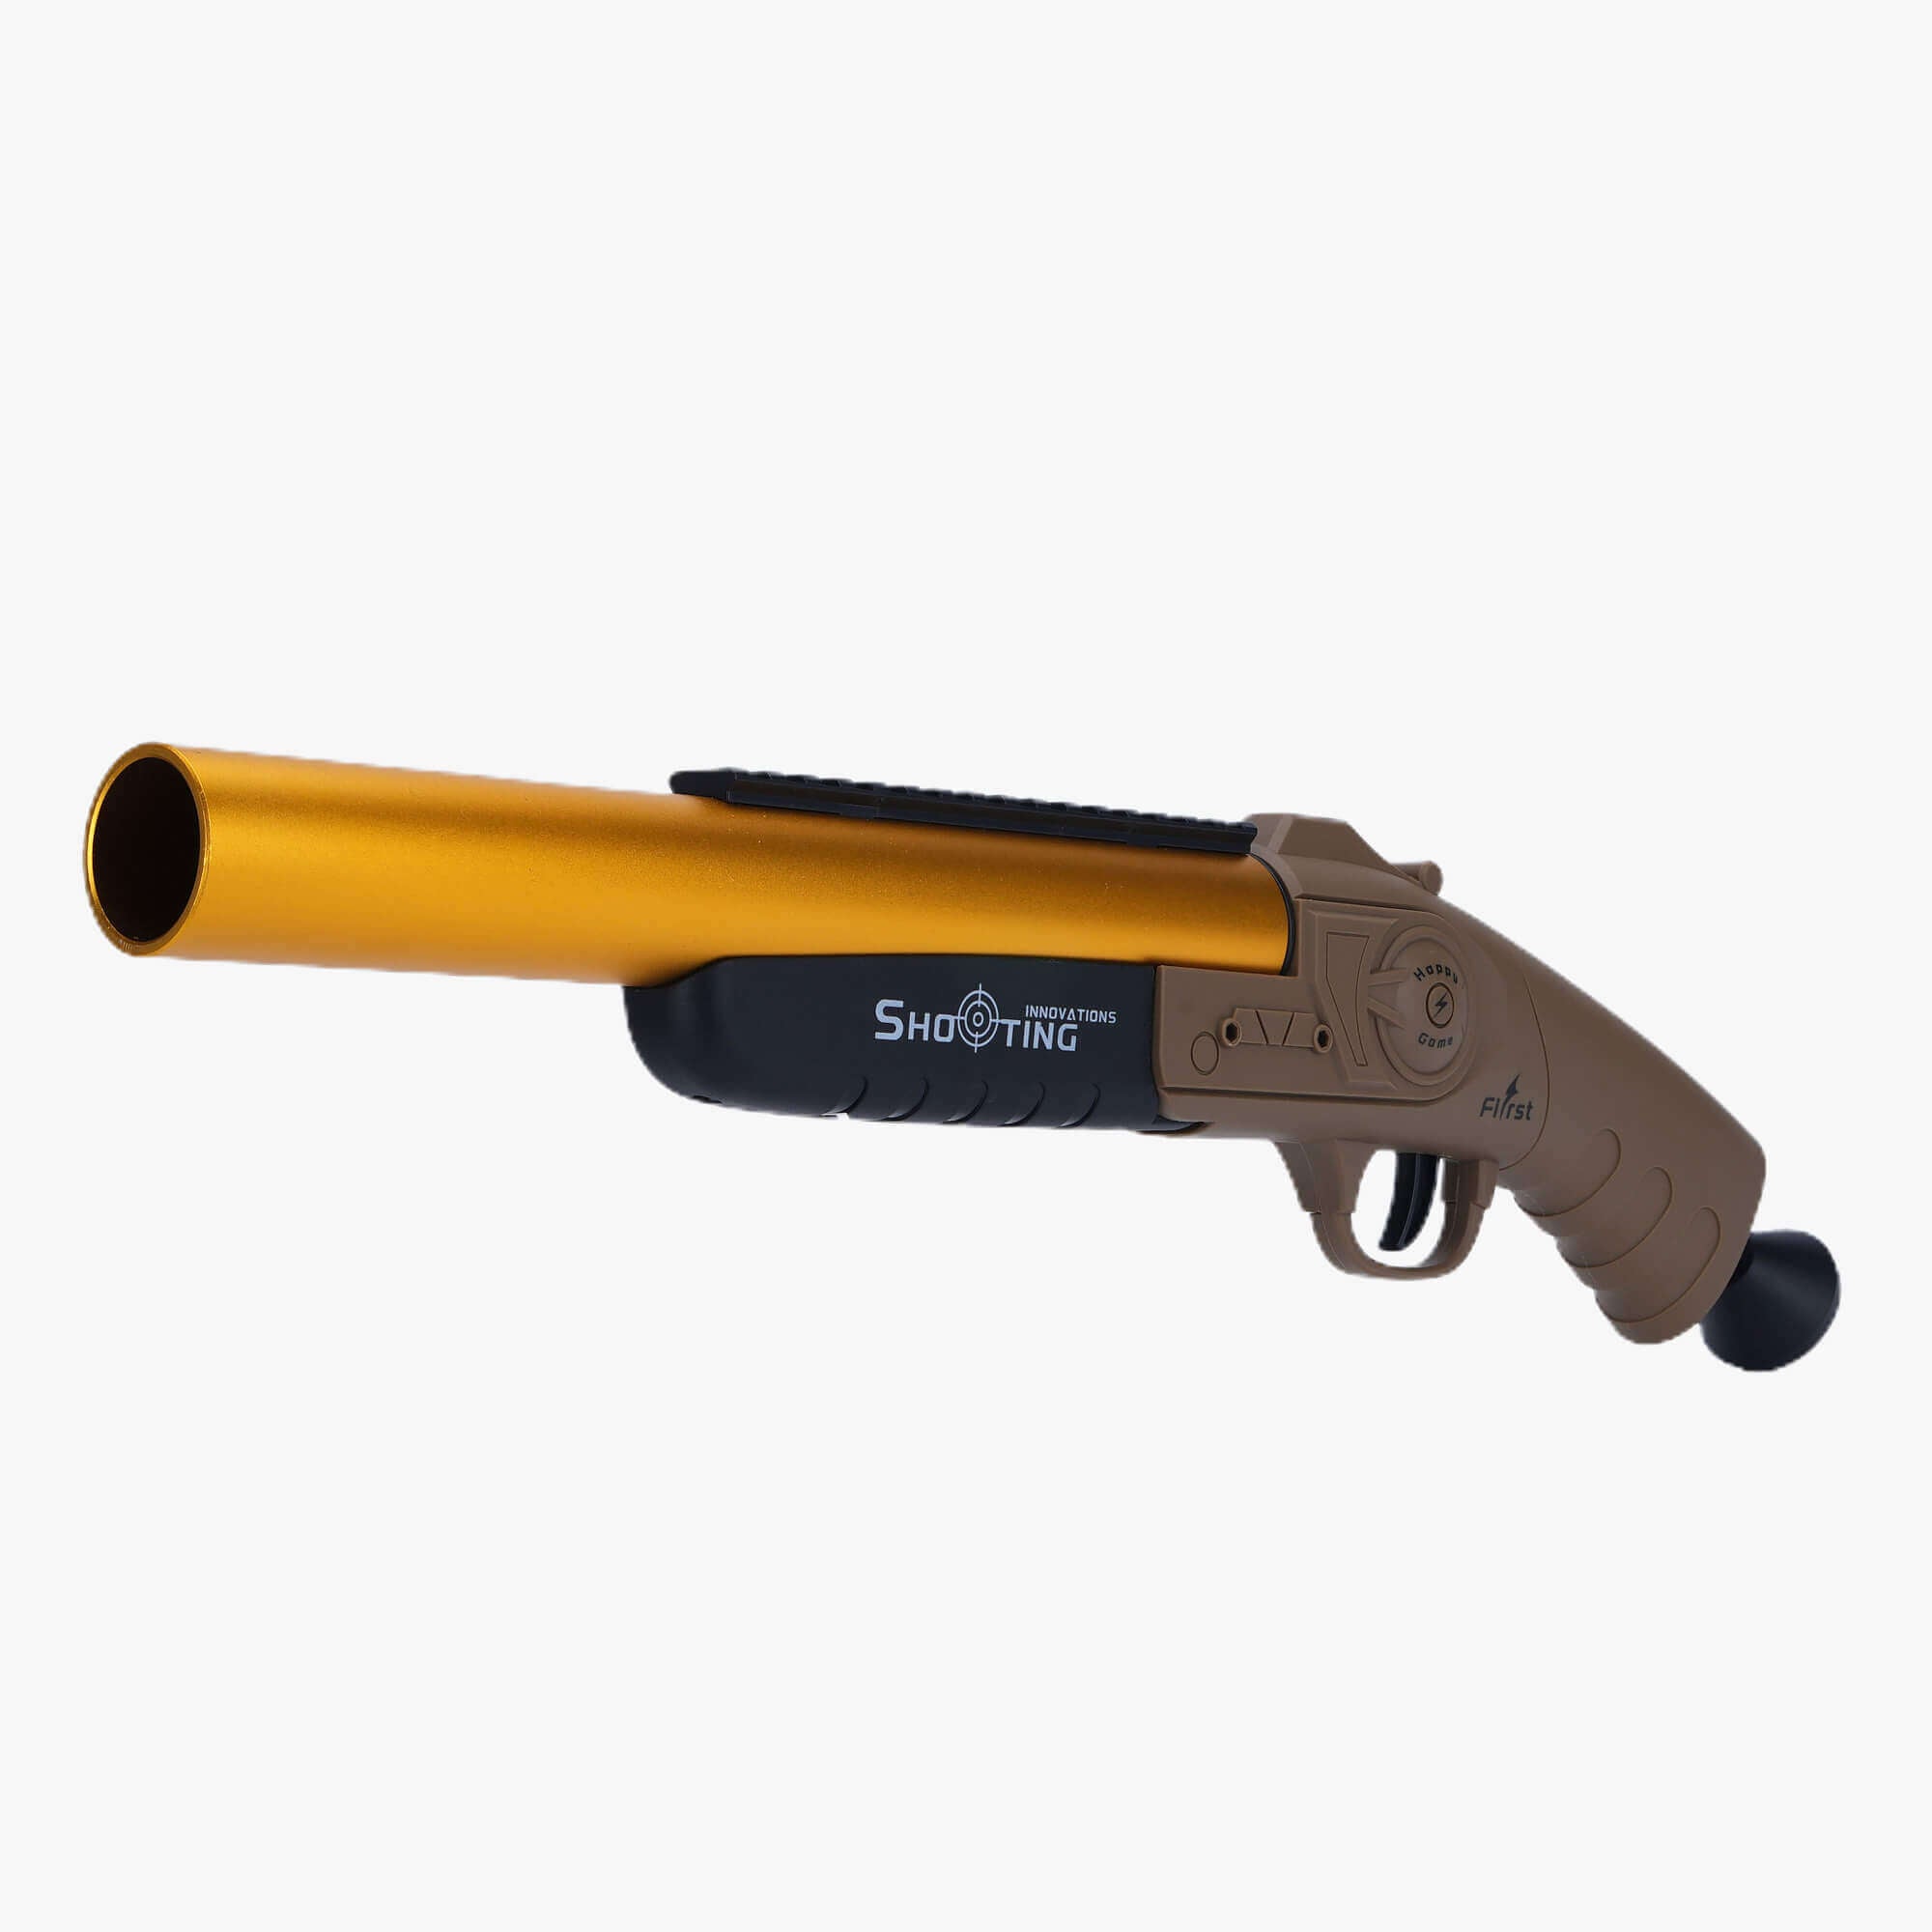 S686 Sawed-off Soft Bullet Shotgun w/ Ejecting Shells